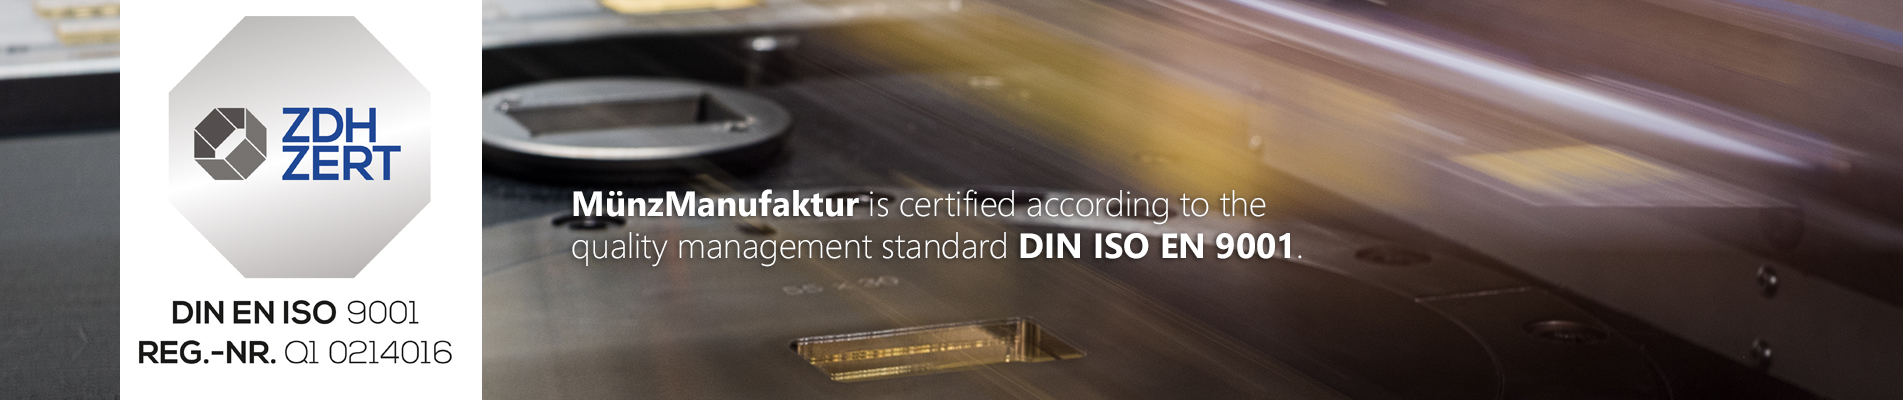 MünzManufaktur quality management DIN ISO EN 9001